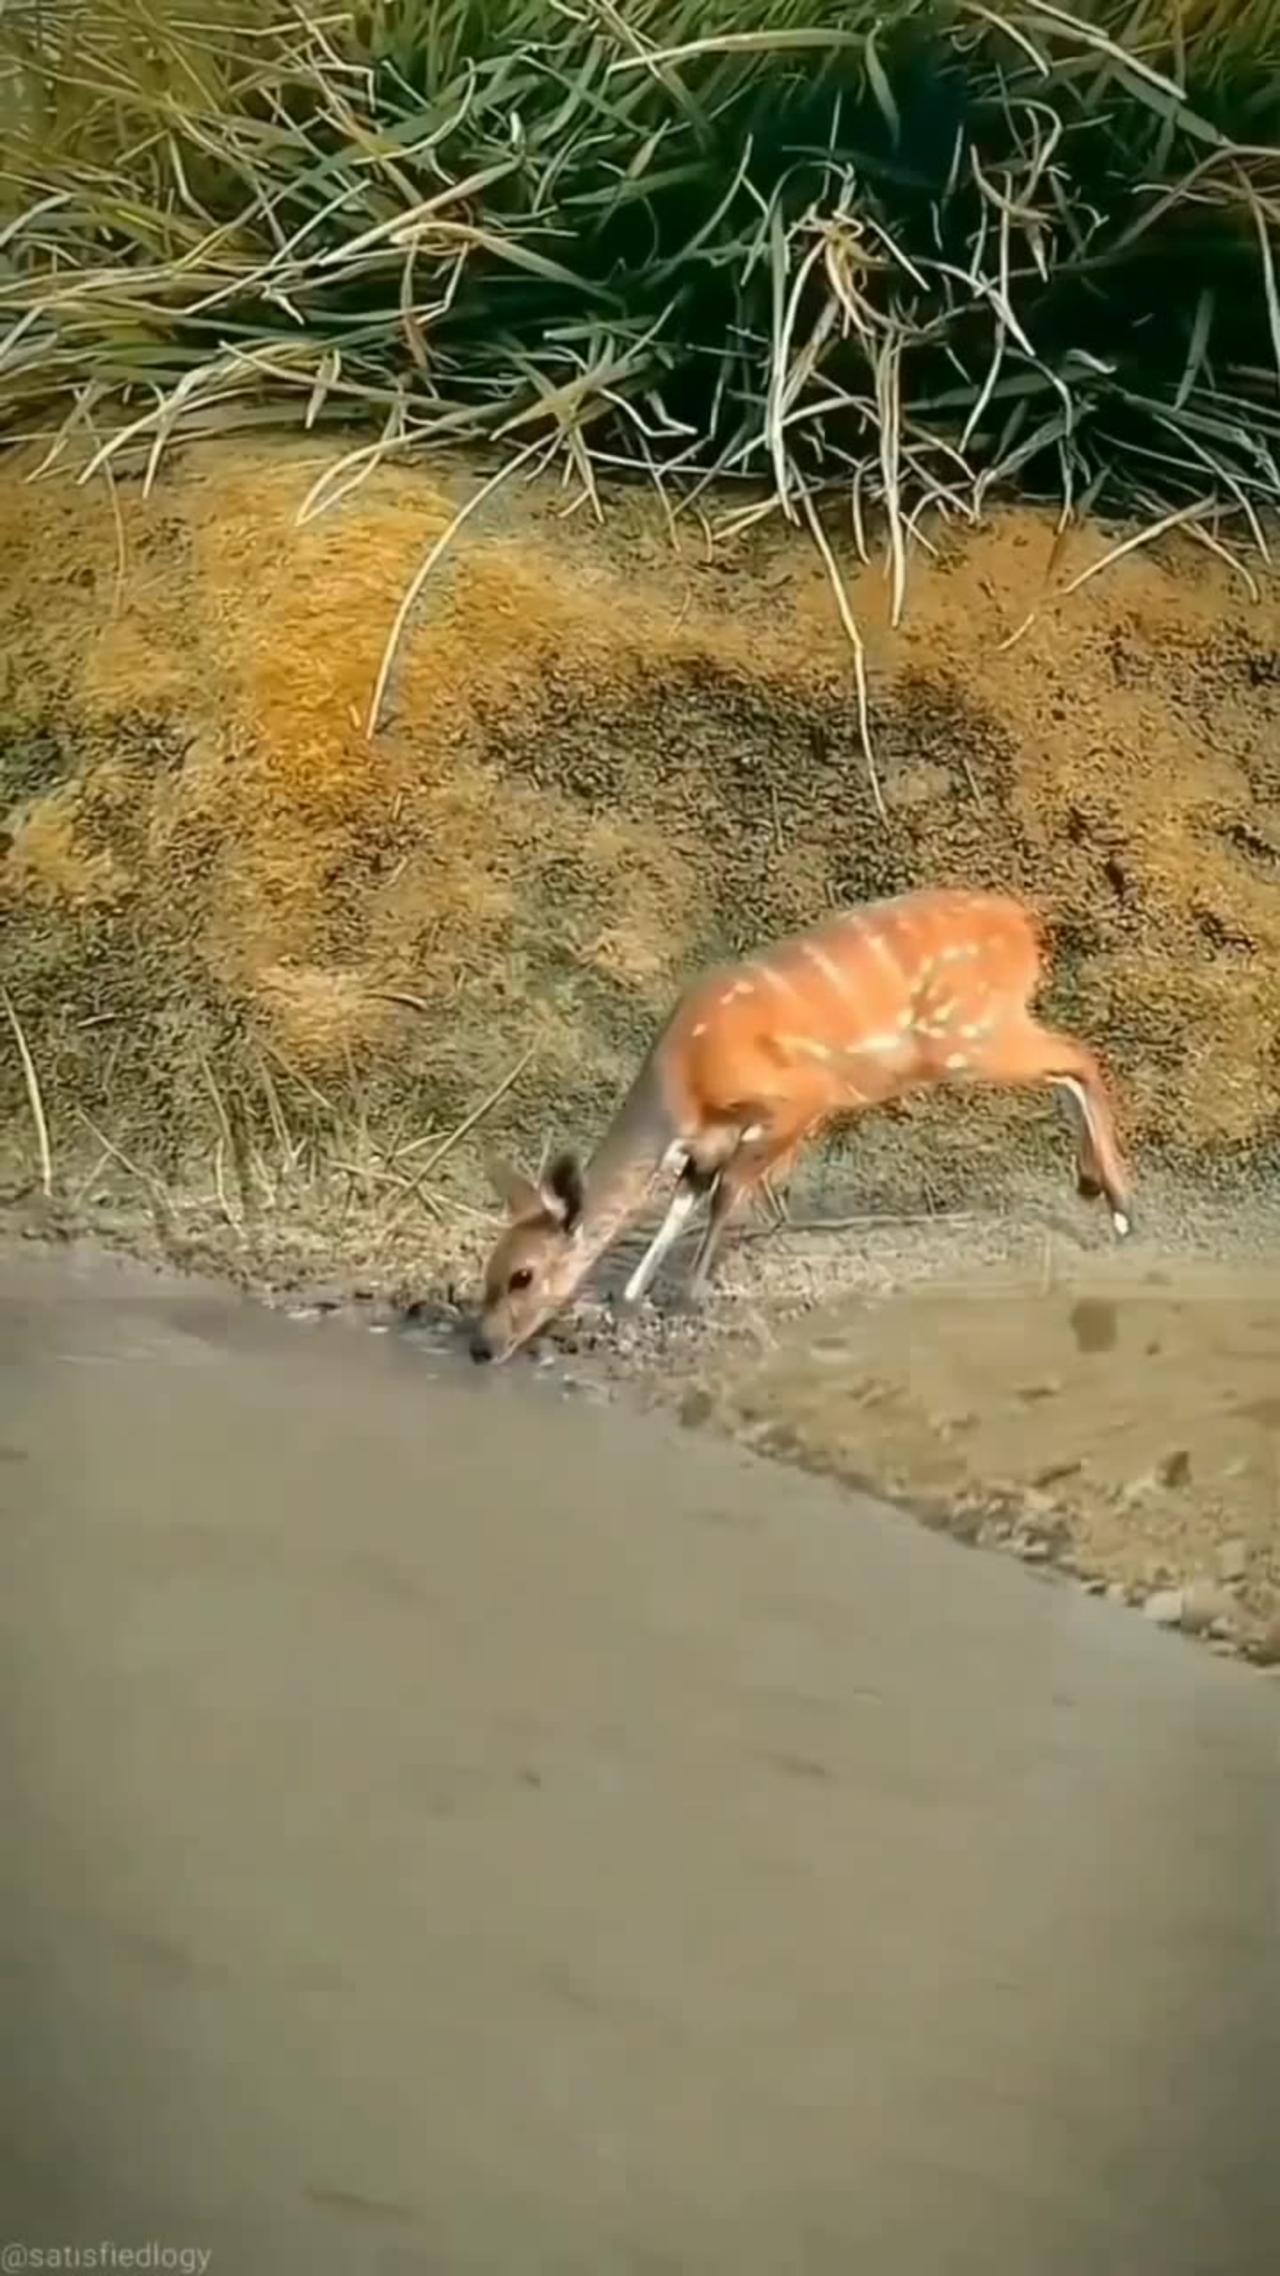 Crocodile attack on deer 😯